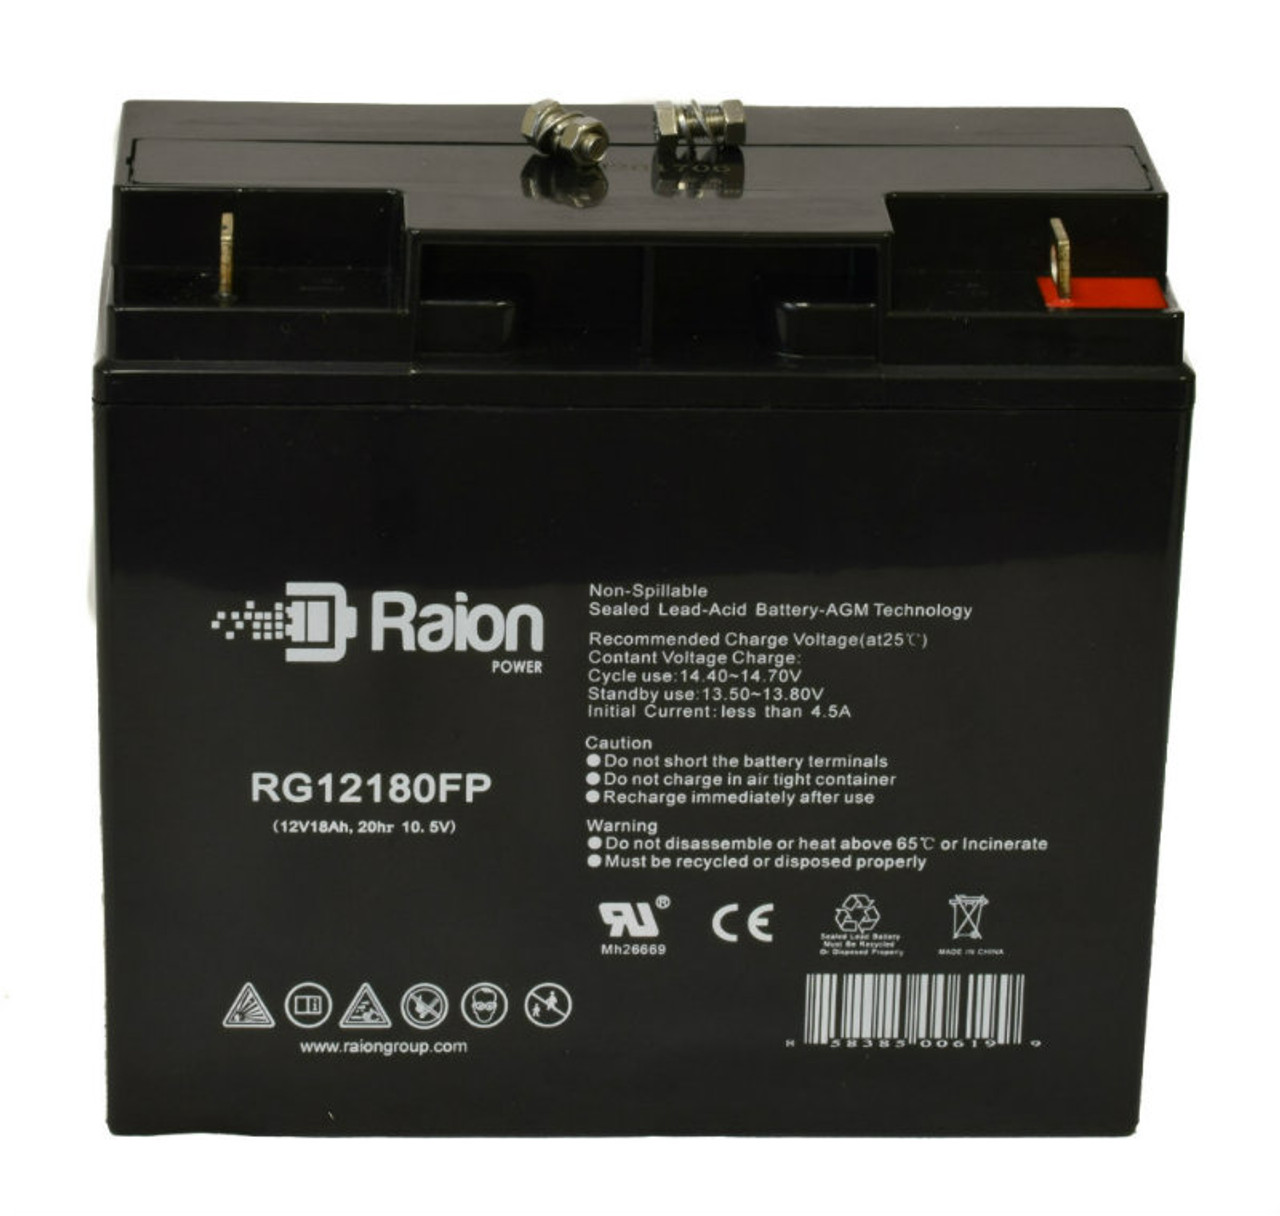 Raion Power RG12180FP 12V 18Ah Lead Acid Battery for Emergi-Lite/Kaufel 860.0032